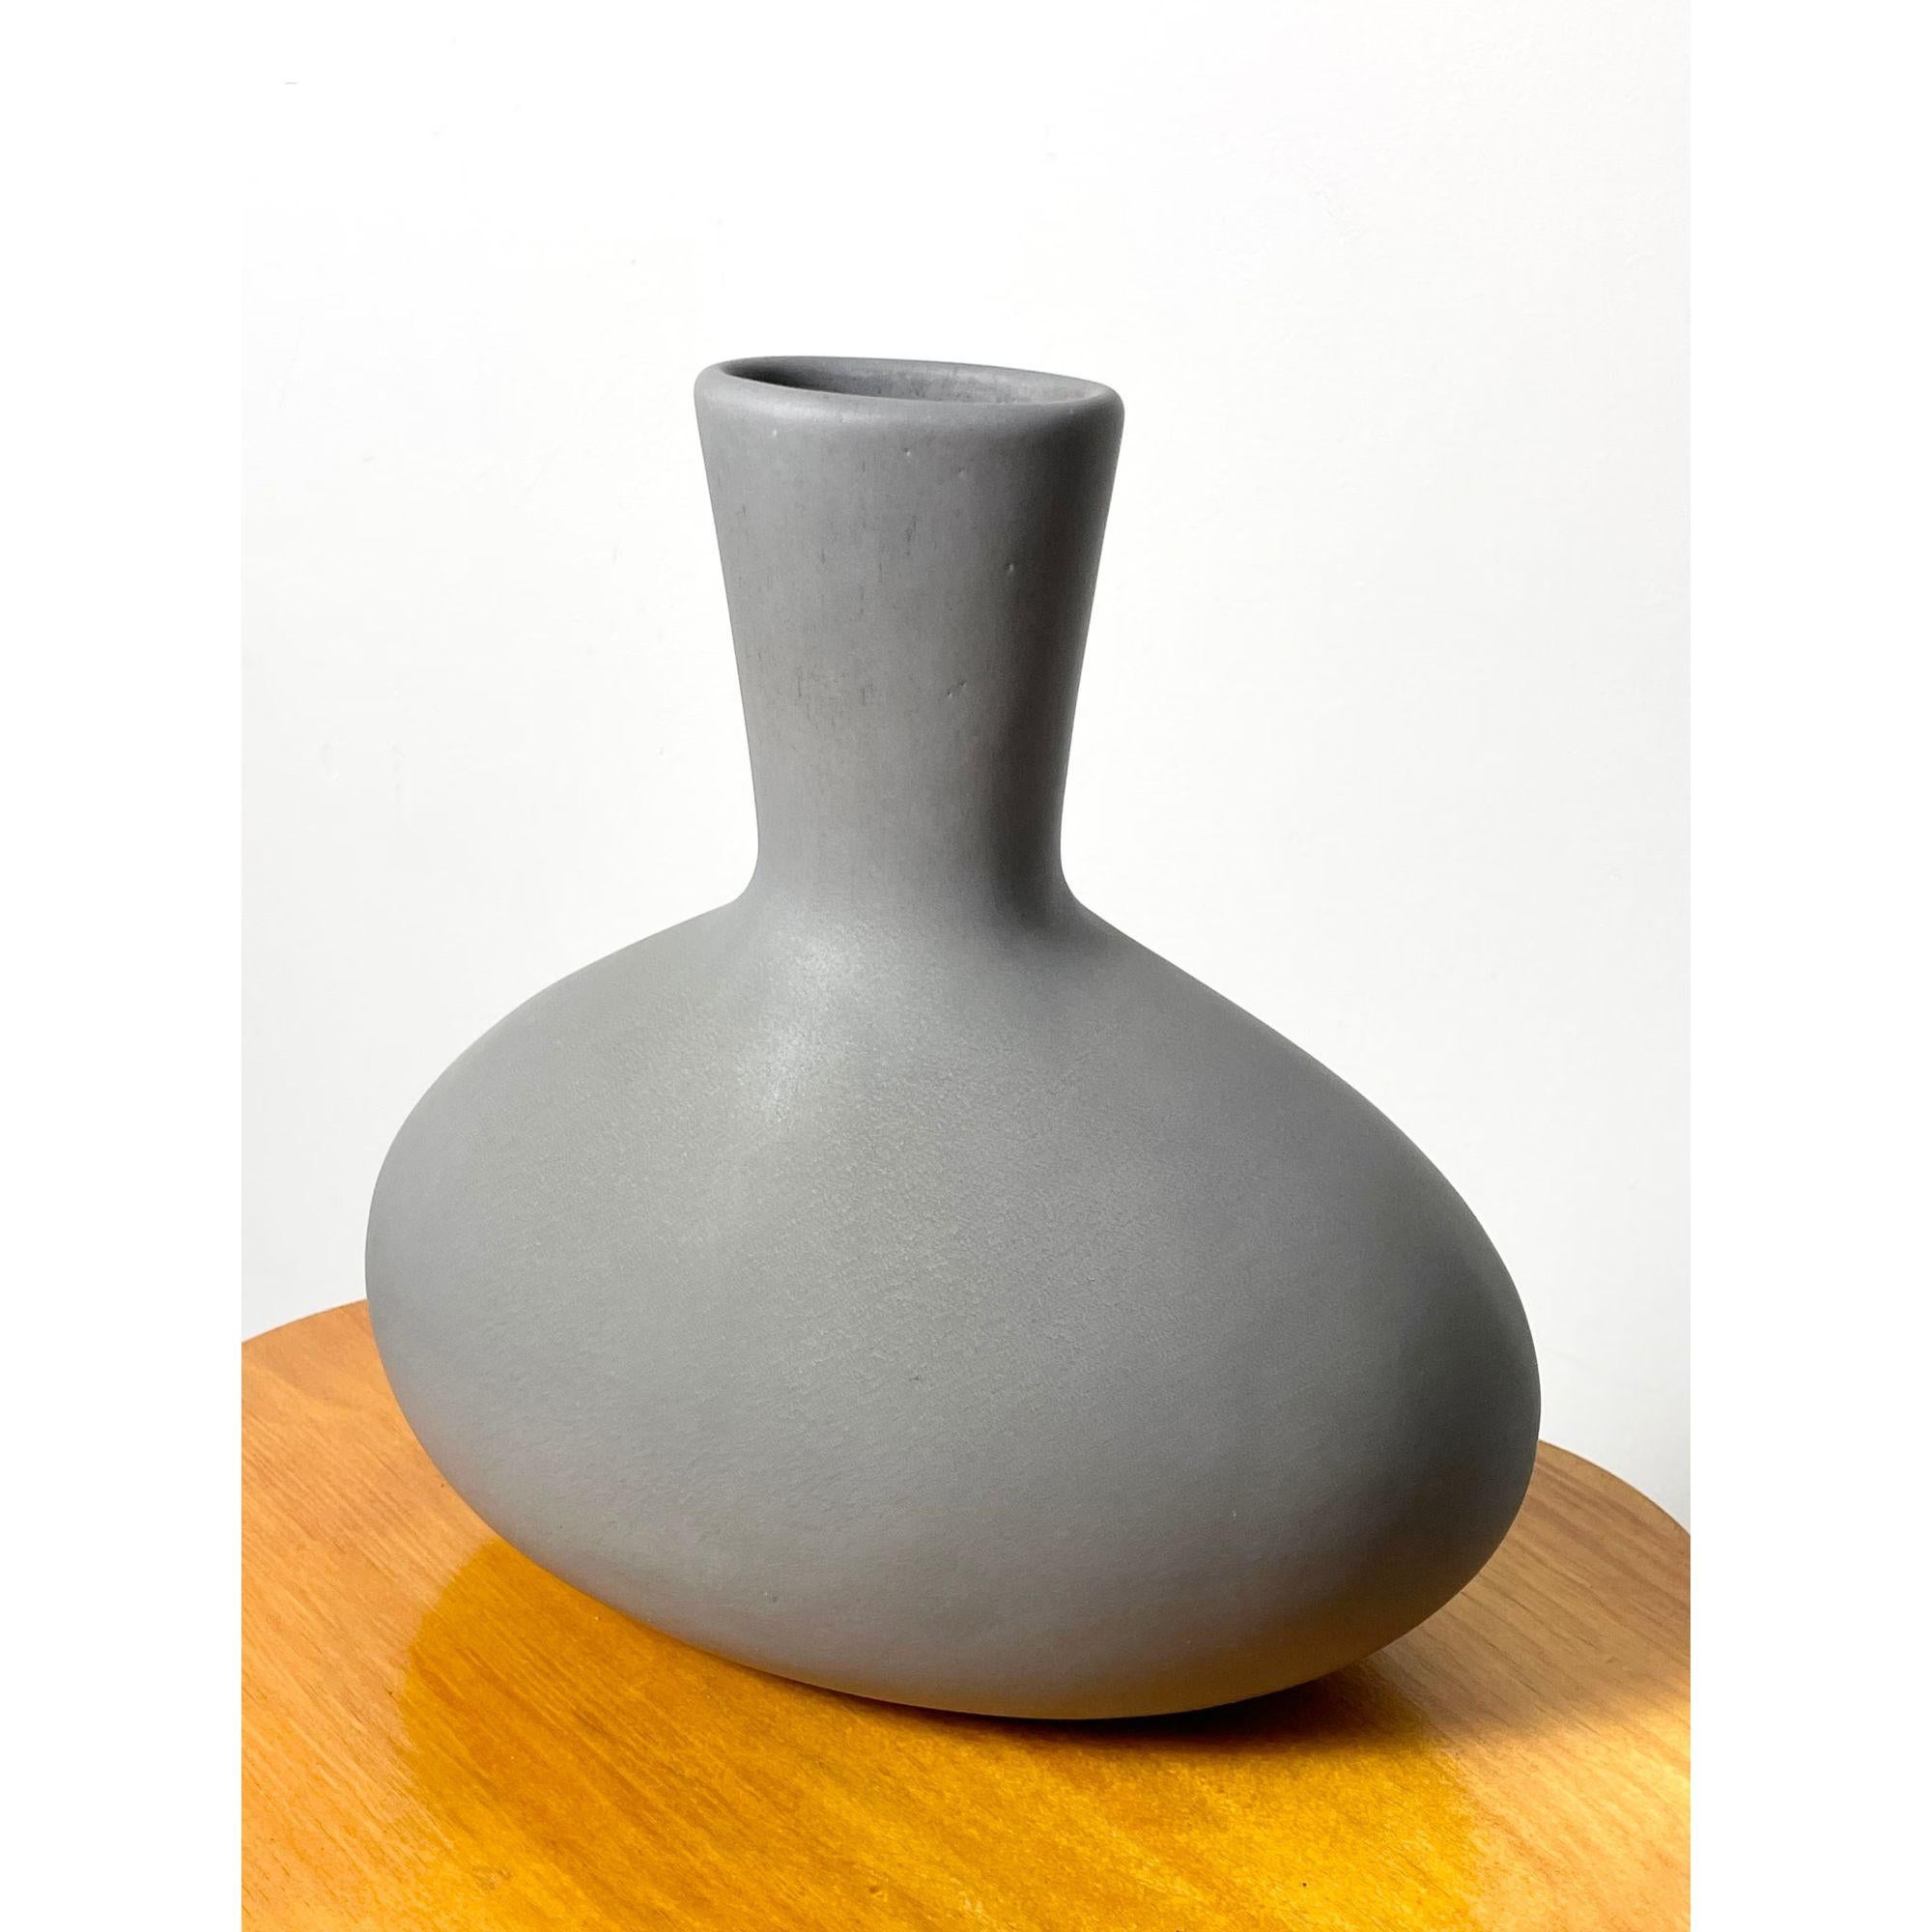 Rare Malcolm Leland Ceramic Egg Shaped Vase Mid Century Modern Architectural Pottery 1950s

Model 19 vase
Egg shaped form in matte gray glaze
Signed to underside

Additional Information:
Materials: Ceramic
Dimensions: 5.5